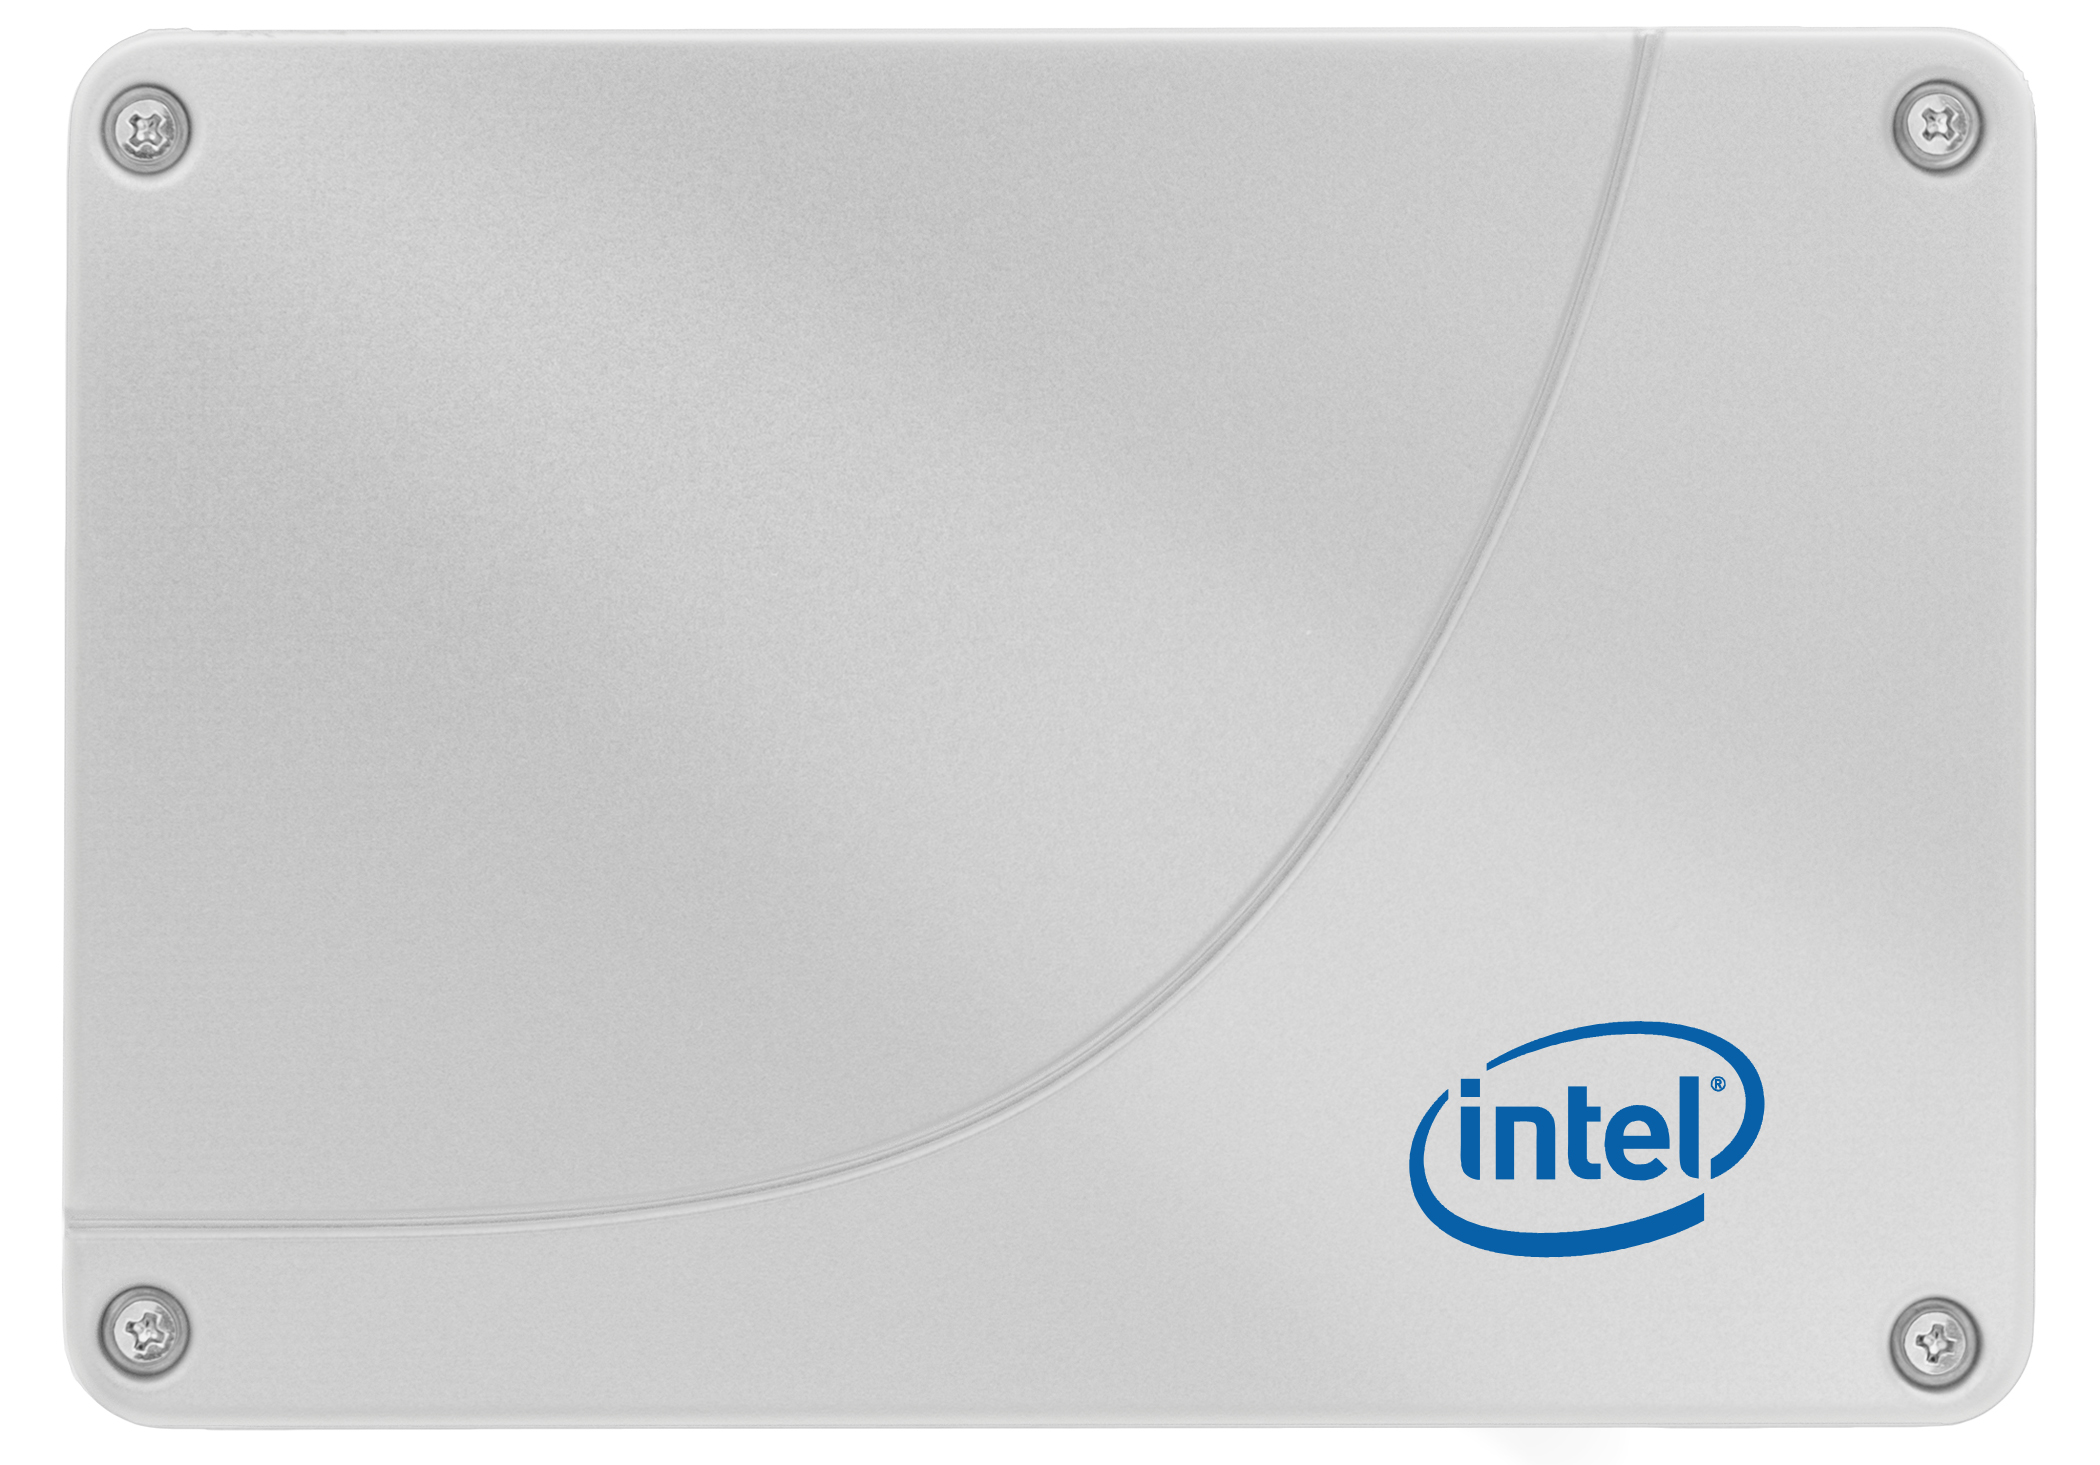 Intel: seria dysków SSD